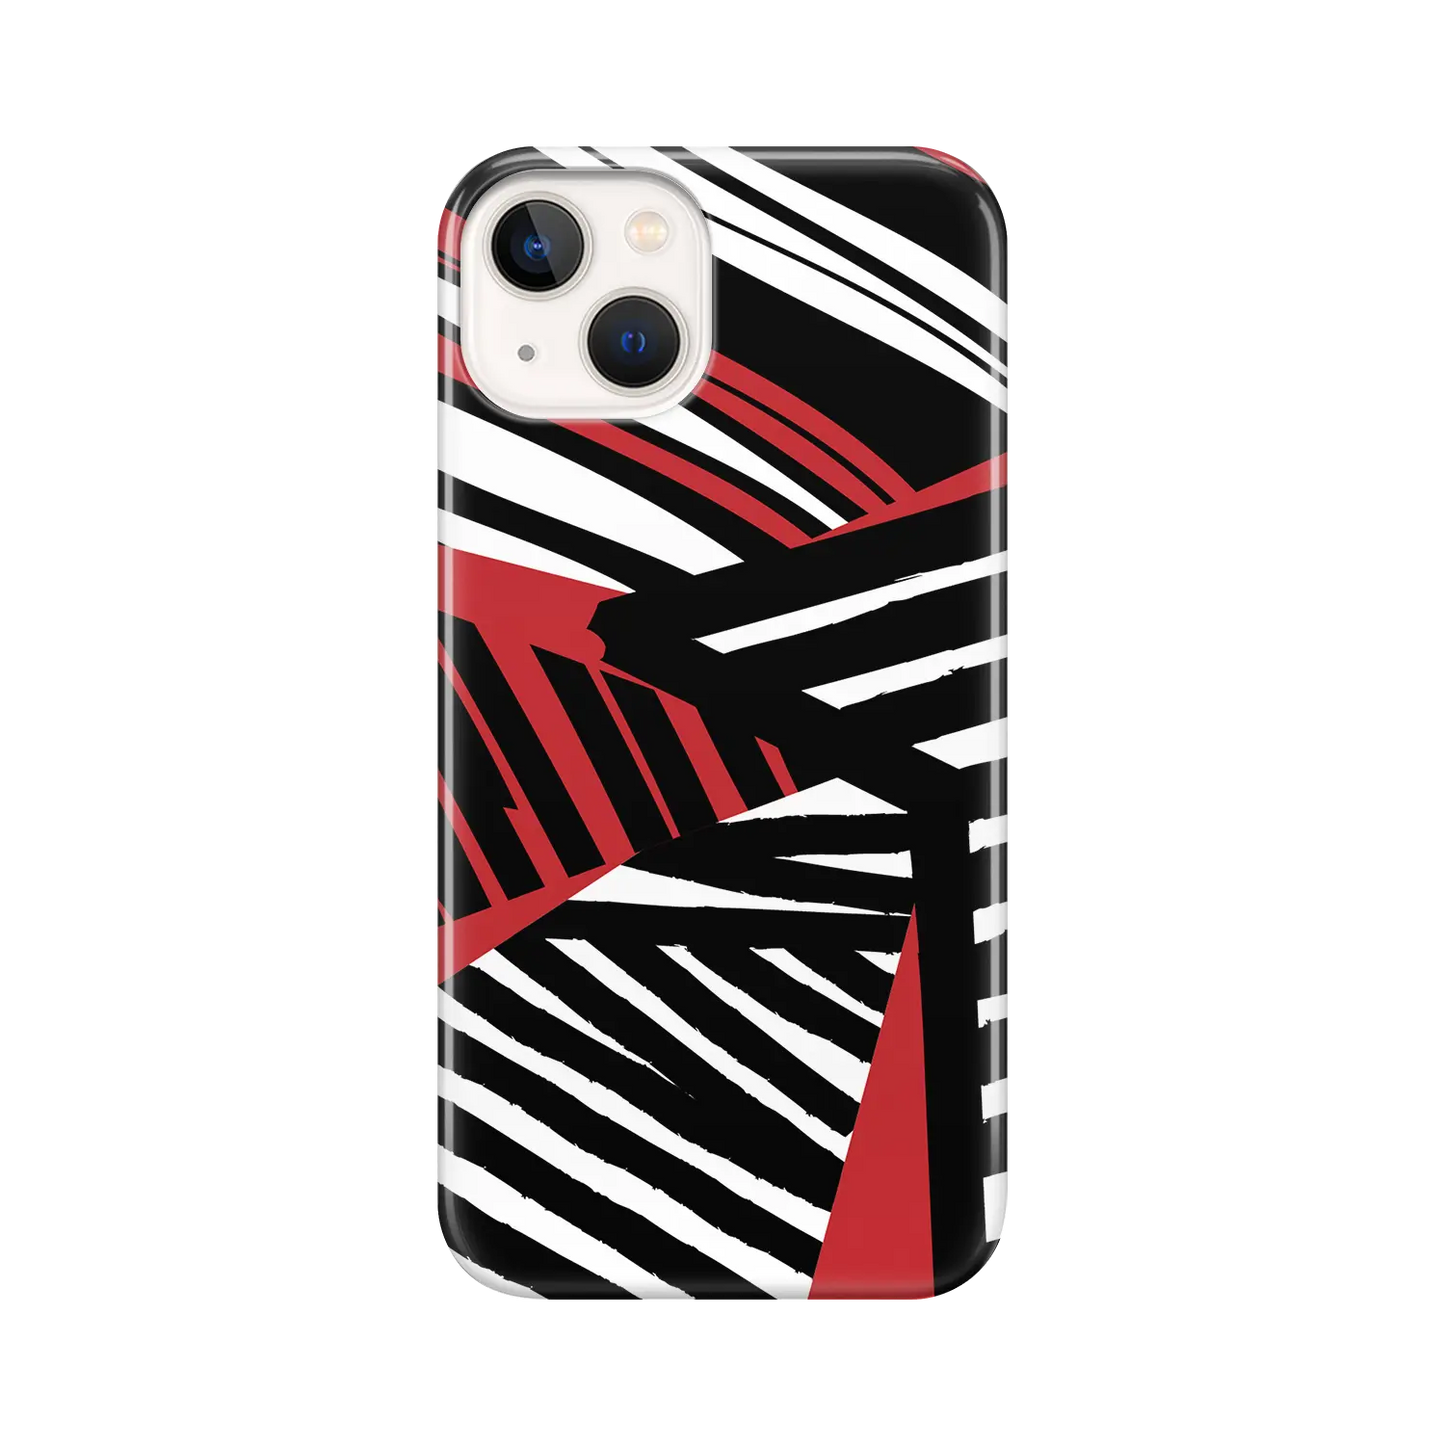 Stripes - Custom iPhone Case